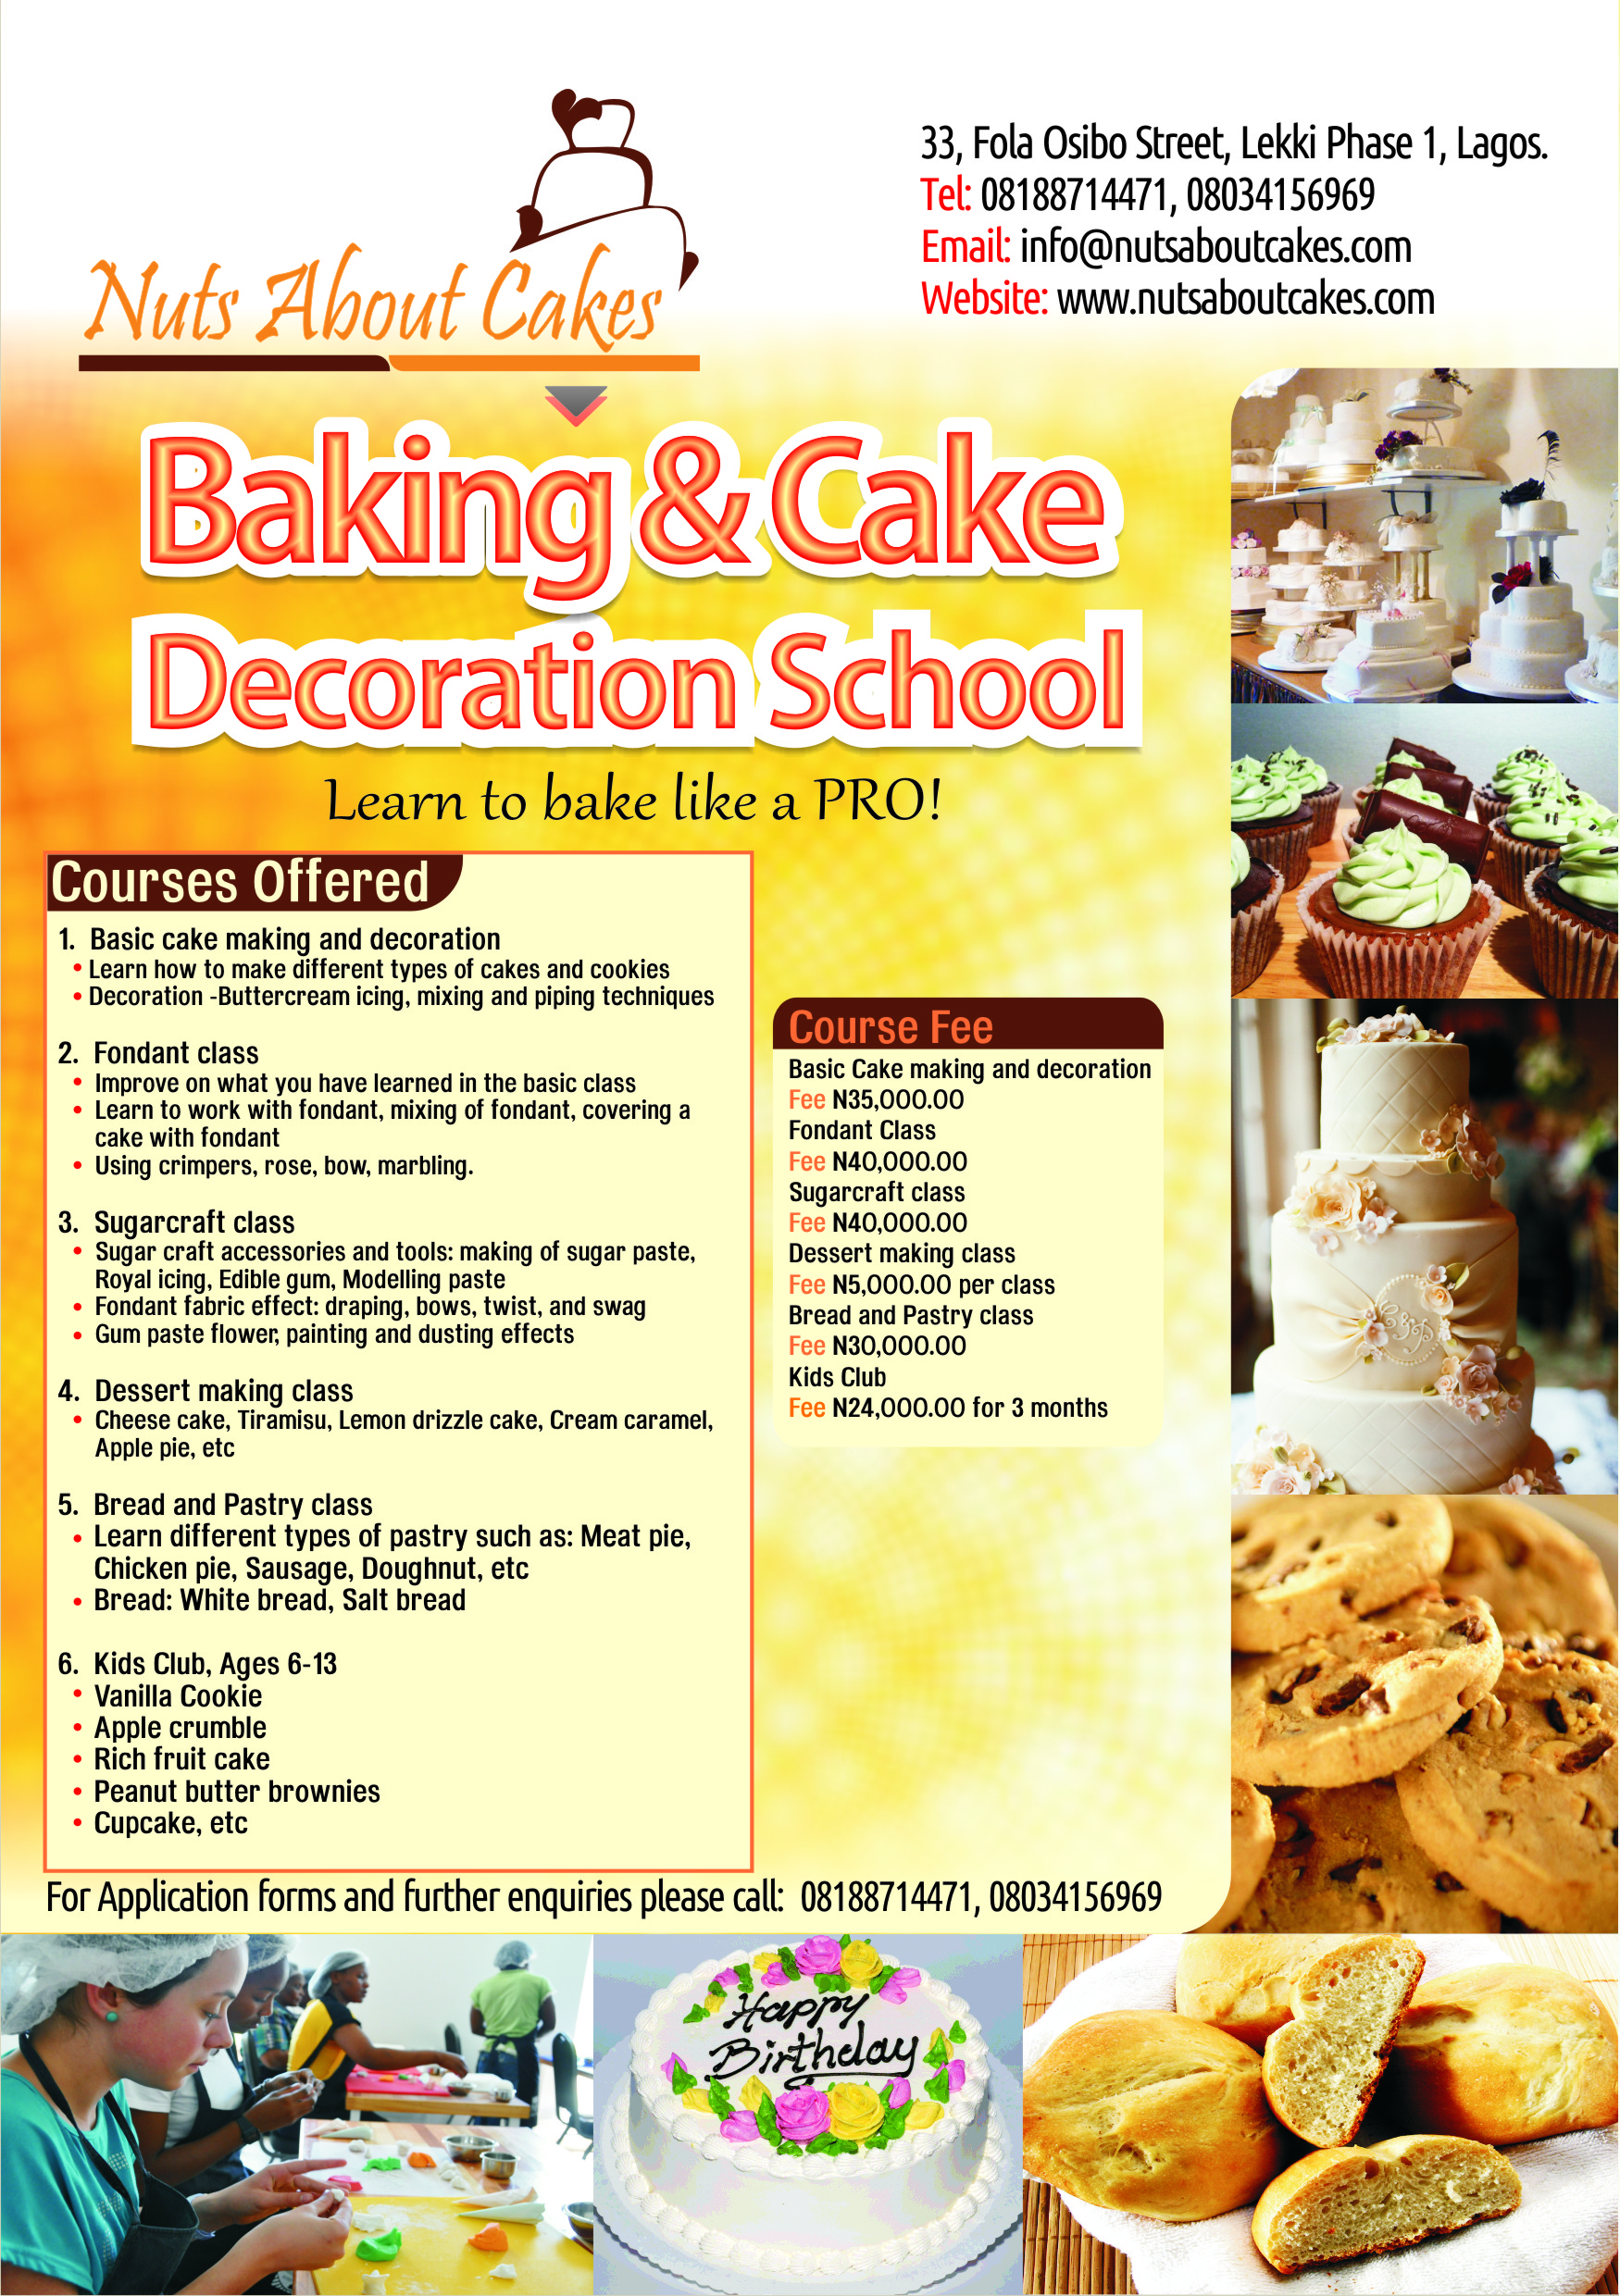 CAKE  Luisas Sugarcraft and Cake Decorating Supplies  Facebook